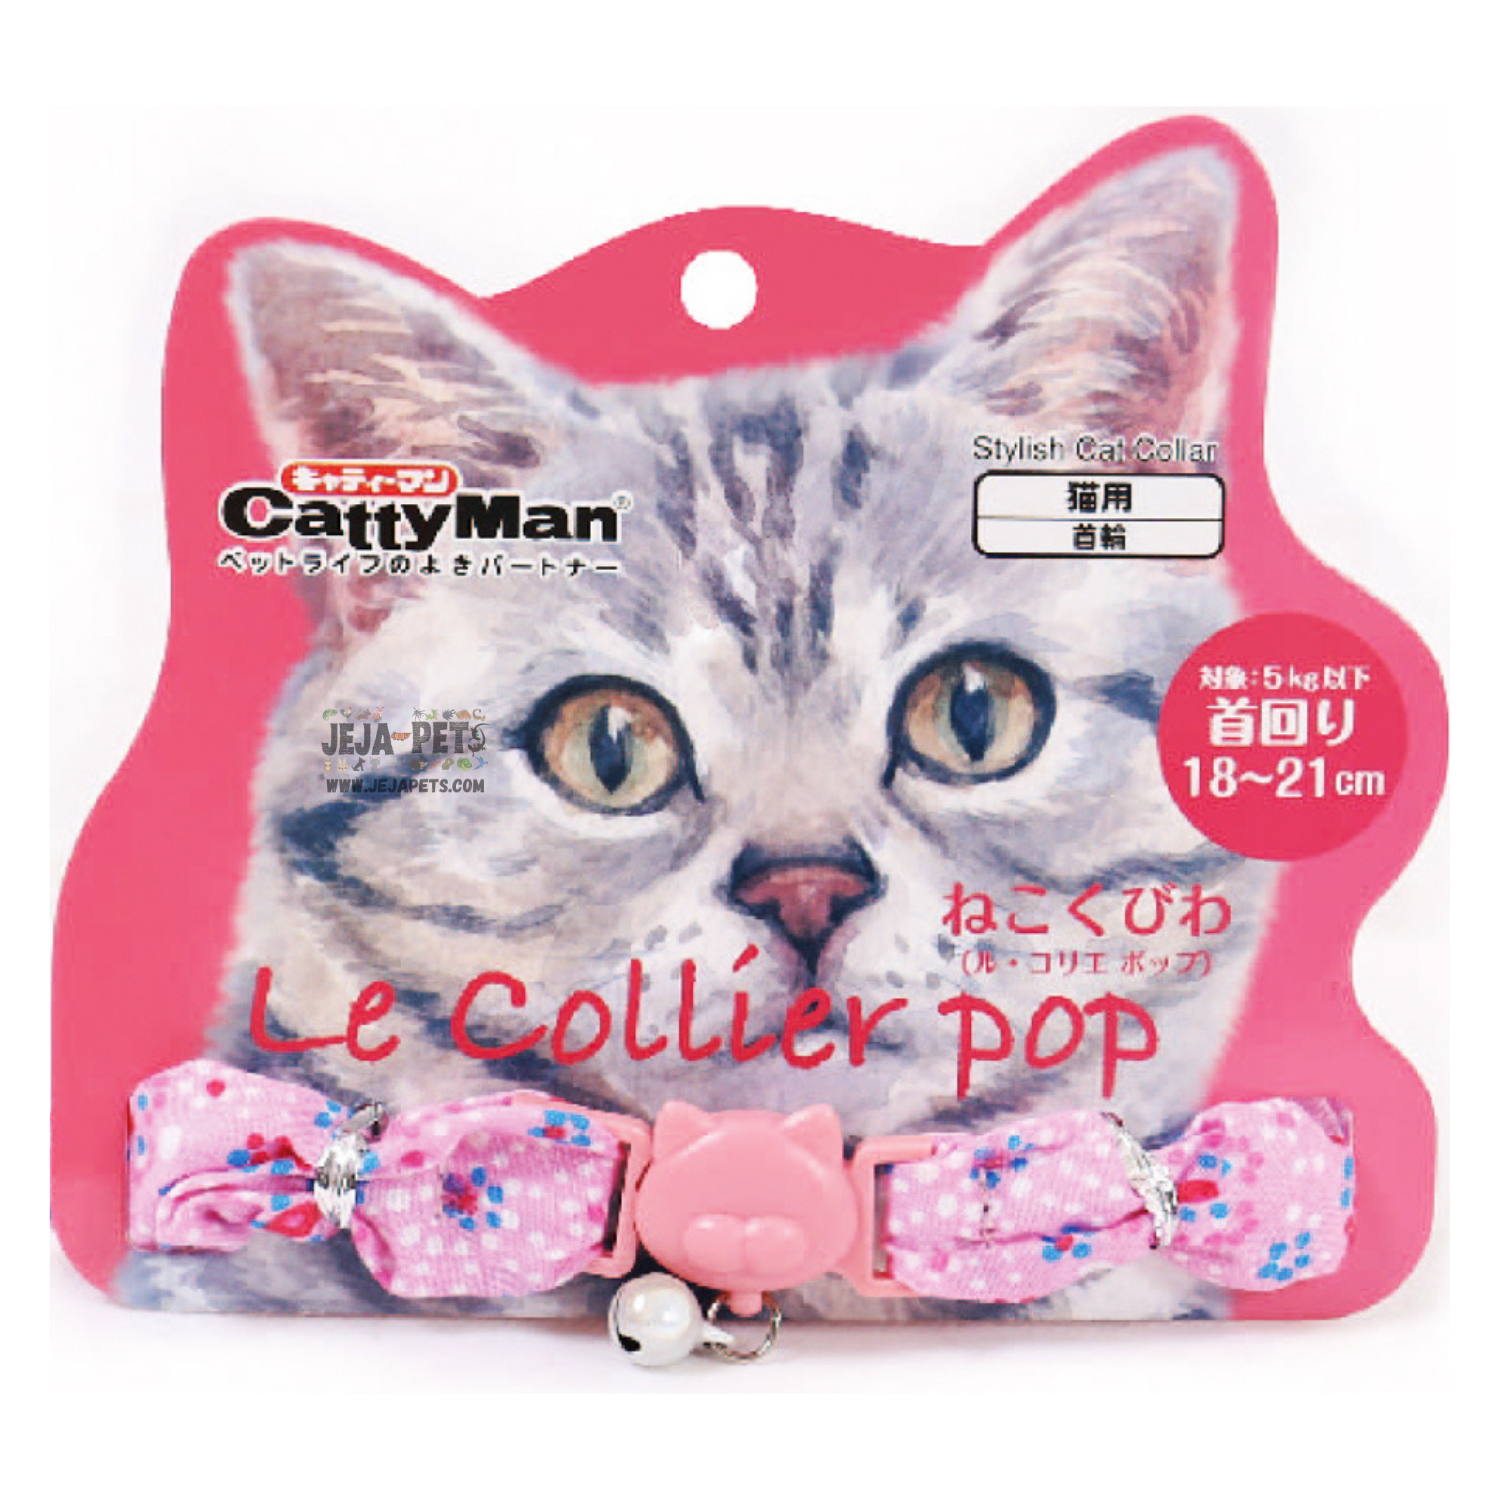 CattyMan Stylish Cat Collar (Pink Flowers) - 12.5 x 10.8 x 2 cm